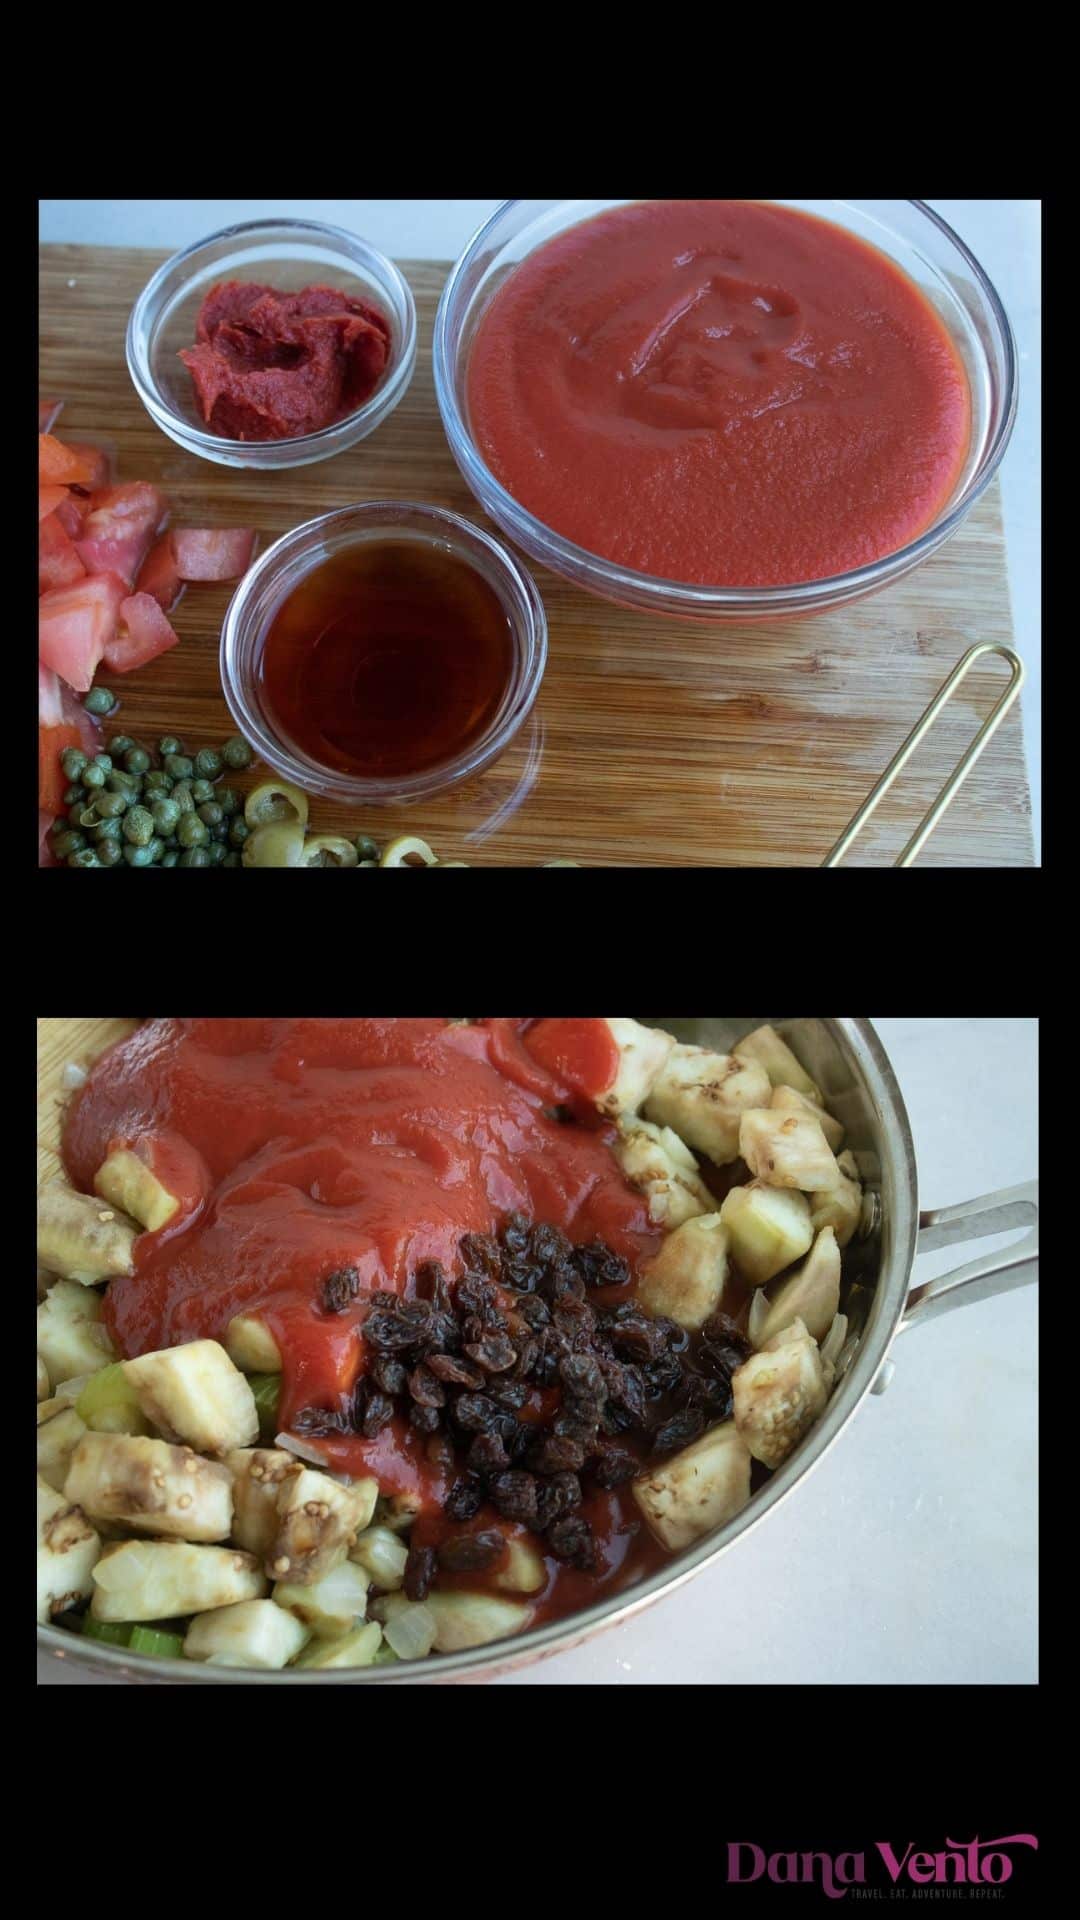 Raisins tomato products for aubergine caponata